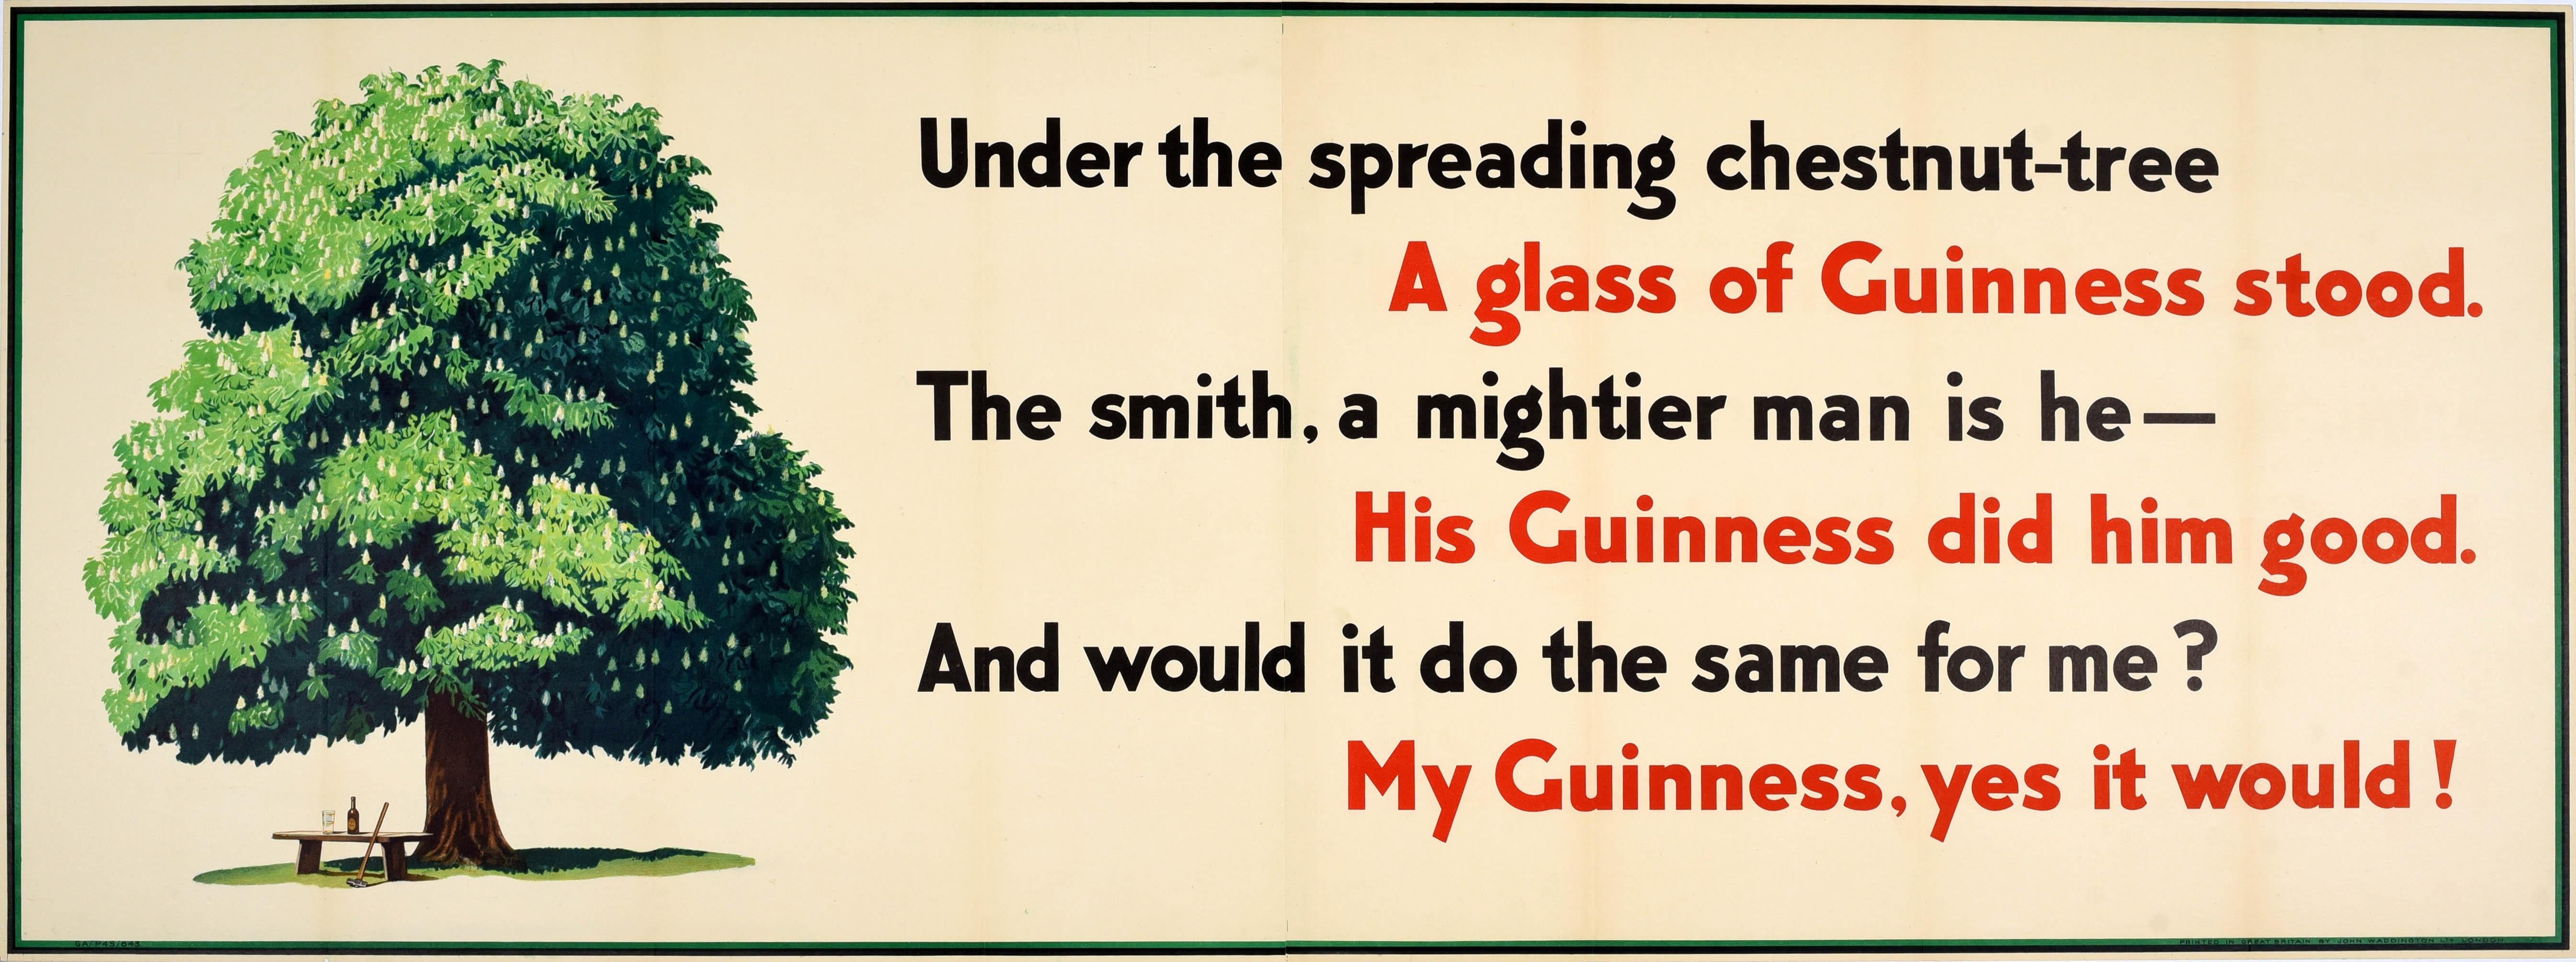 Original Vintage Advertising Poster Guinness Chestnut Tree Irish Dry Stout Beer